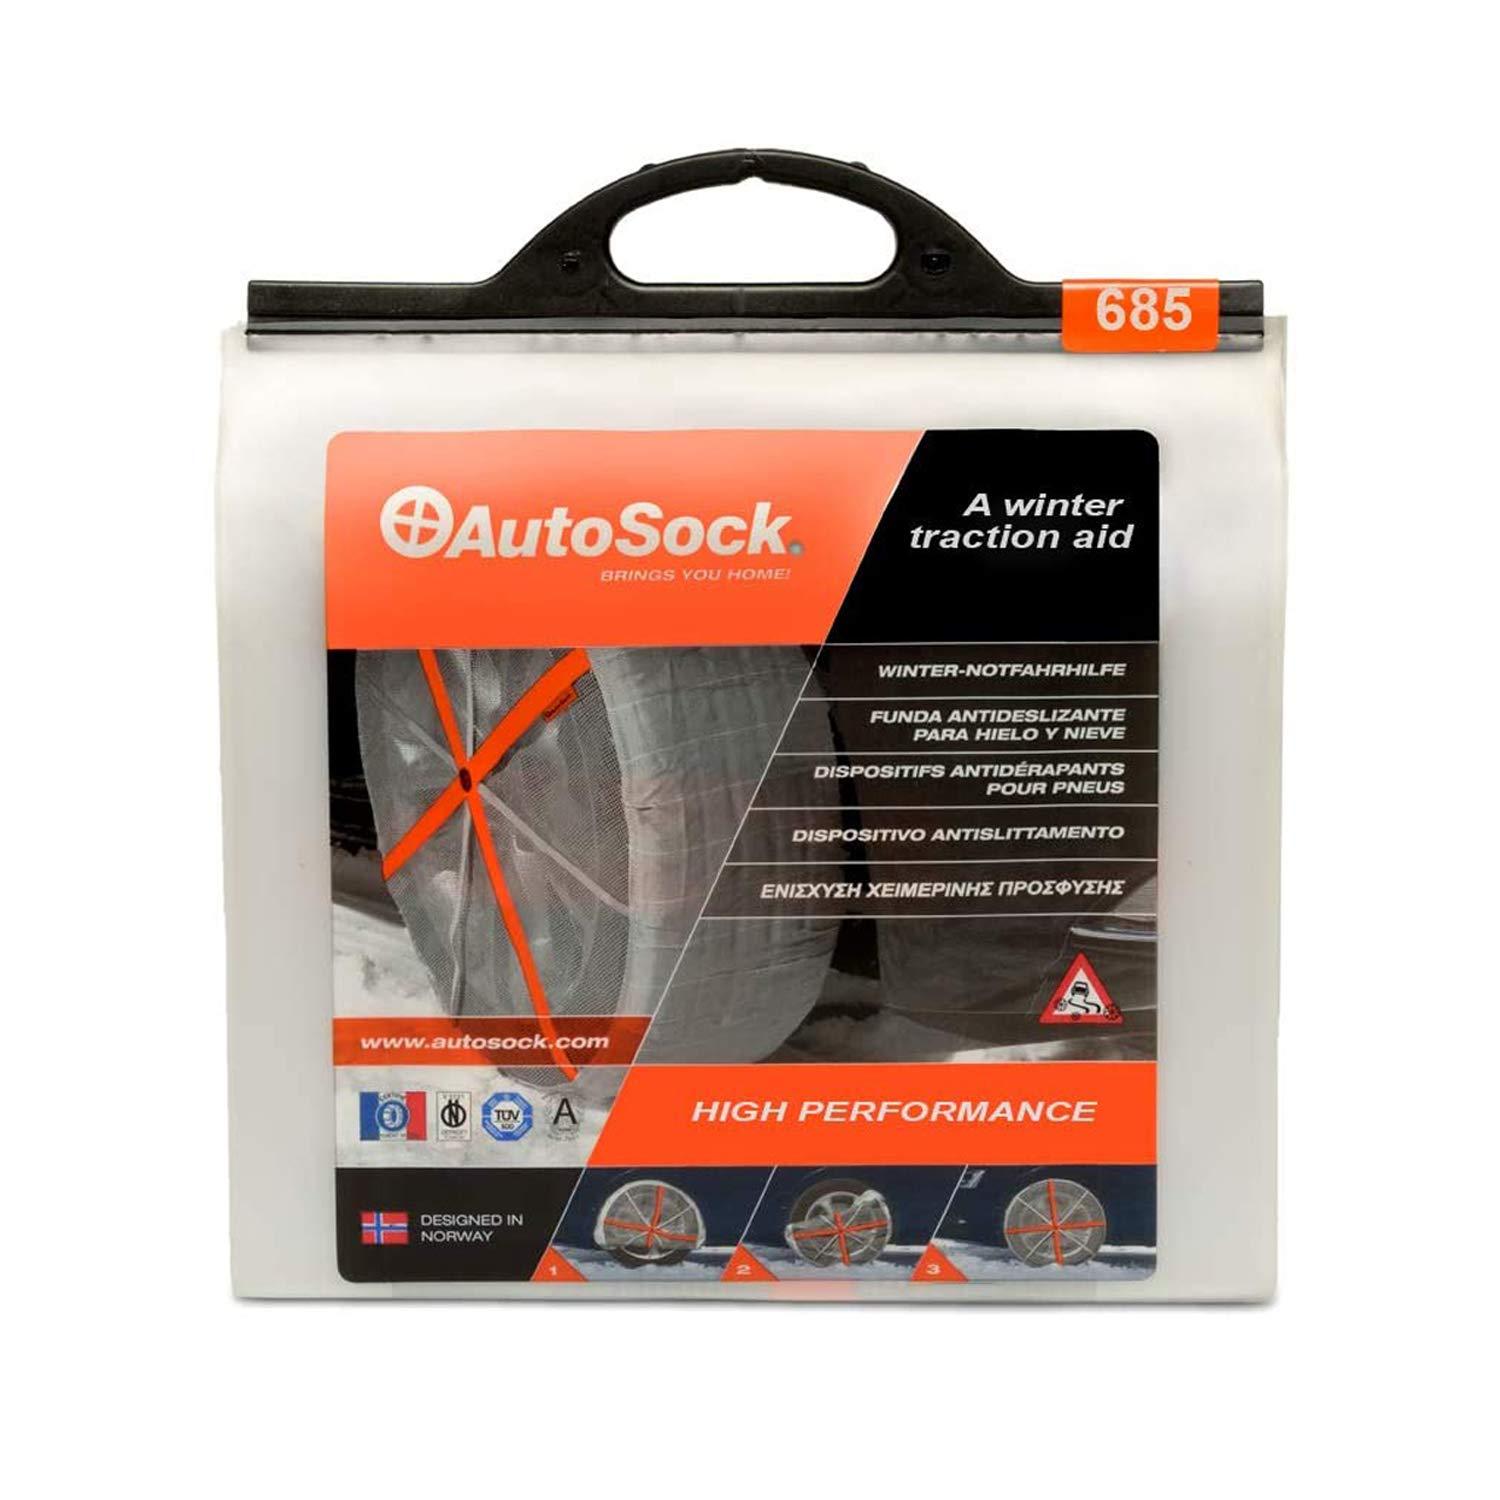 AutoSock(オートソック) 「布製タイヤすべり止め」 チェーン規制適合 オートソックハイパフォーマンス 正規品 ASK685